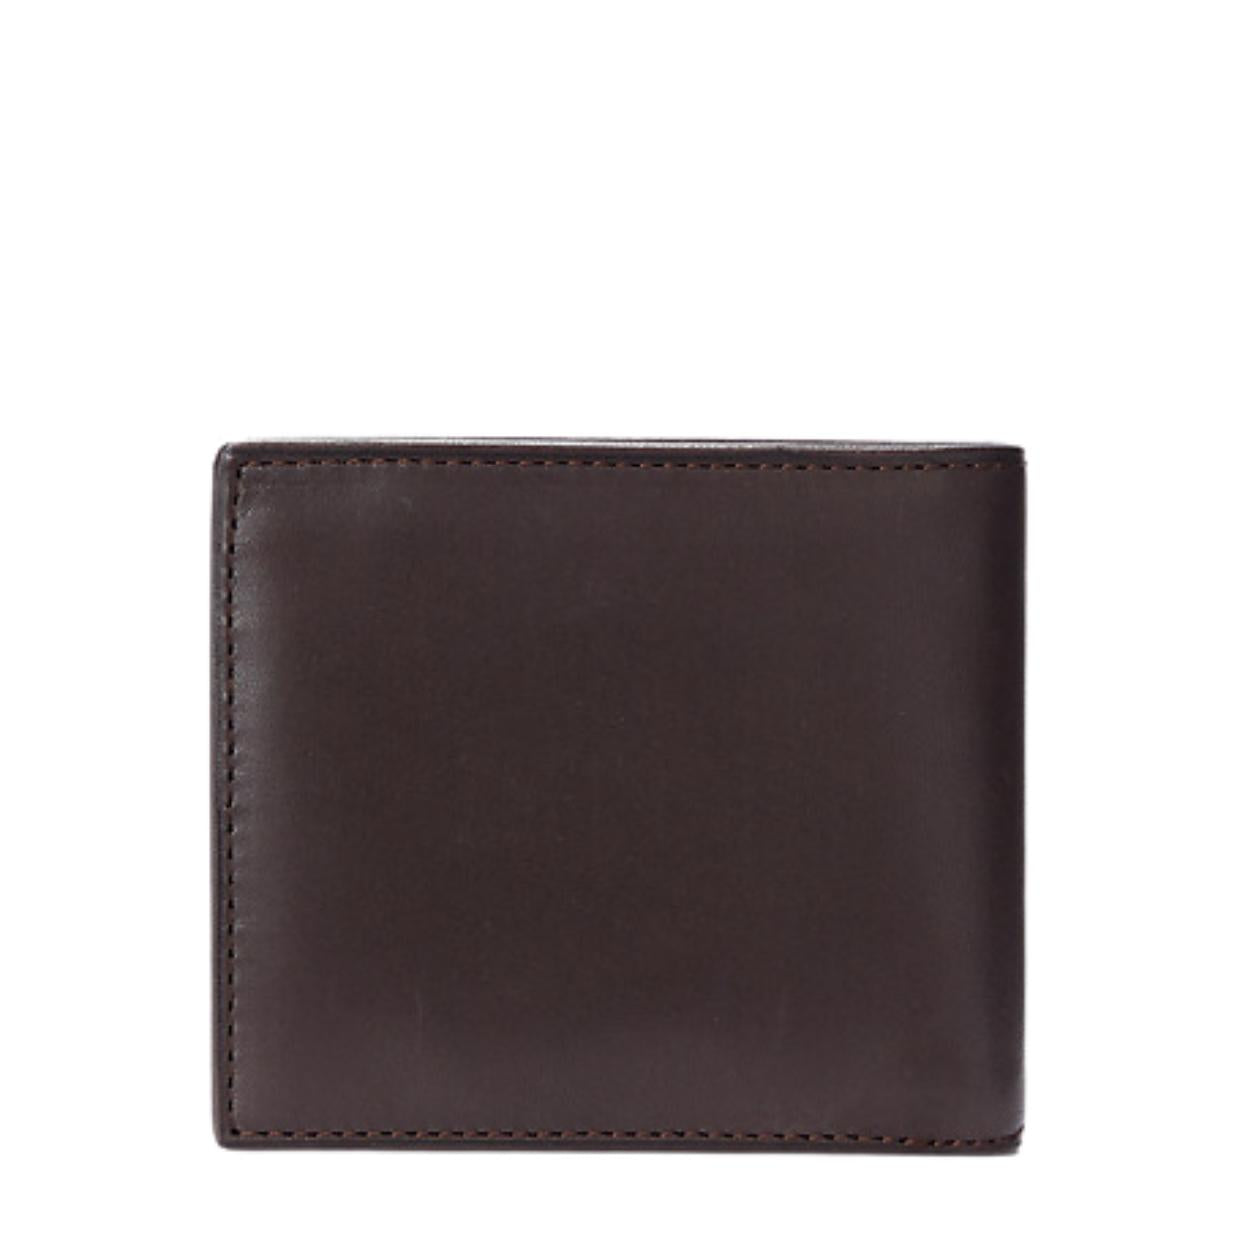 Polo Ralph Lauren Logo Brown Leather Billfold Wallet